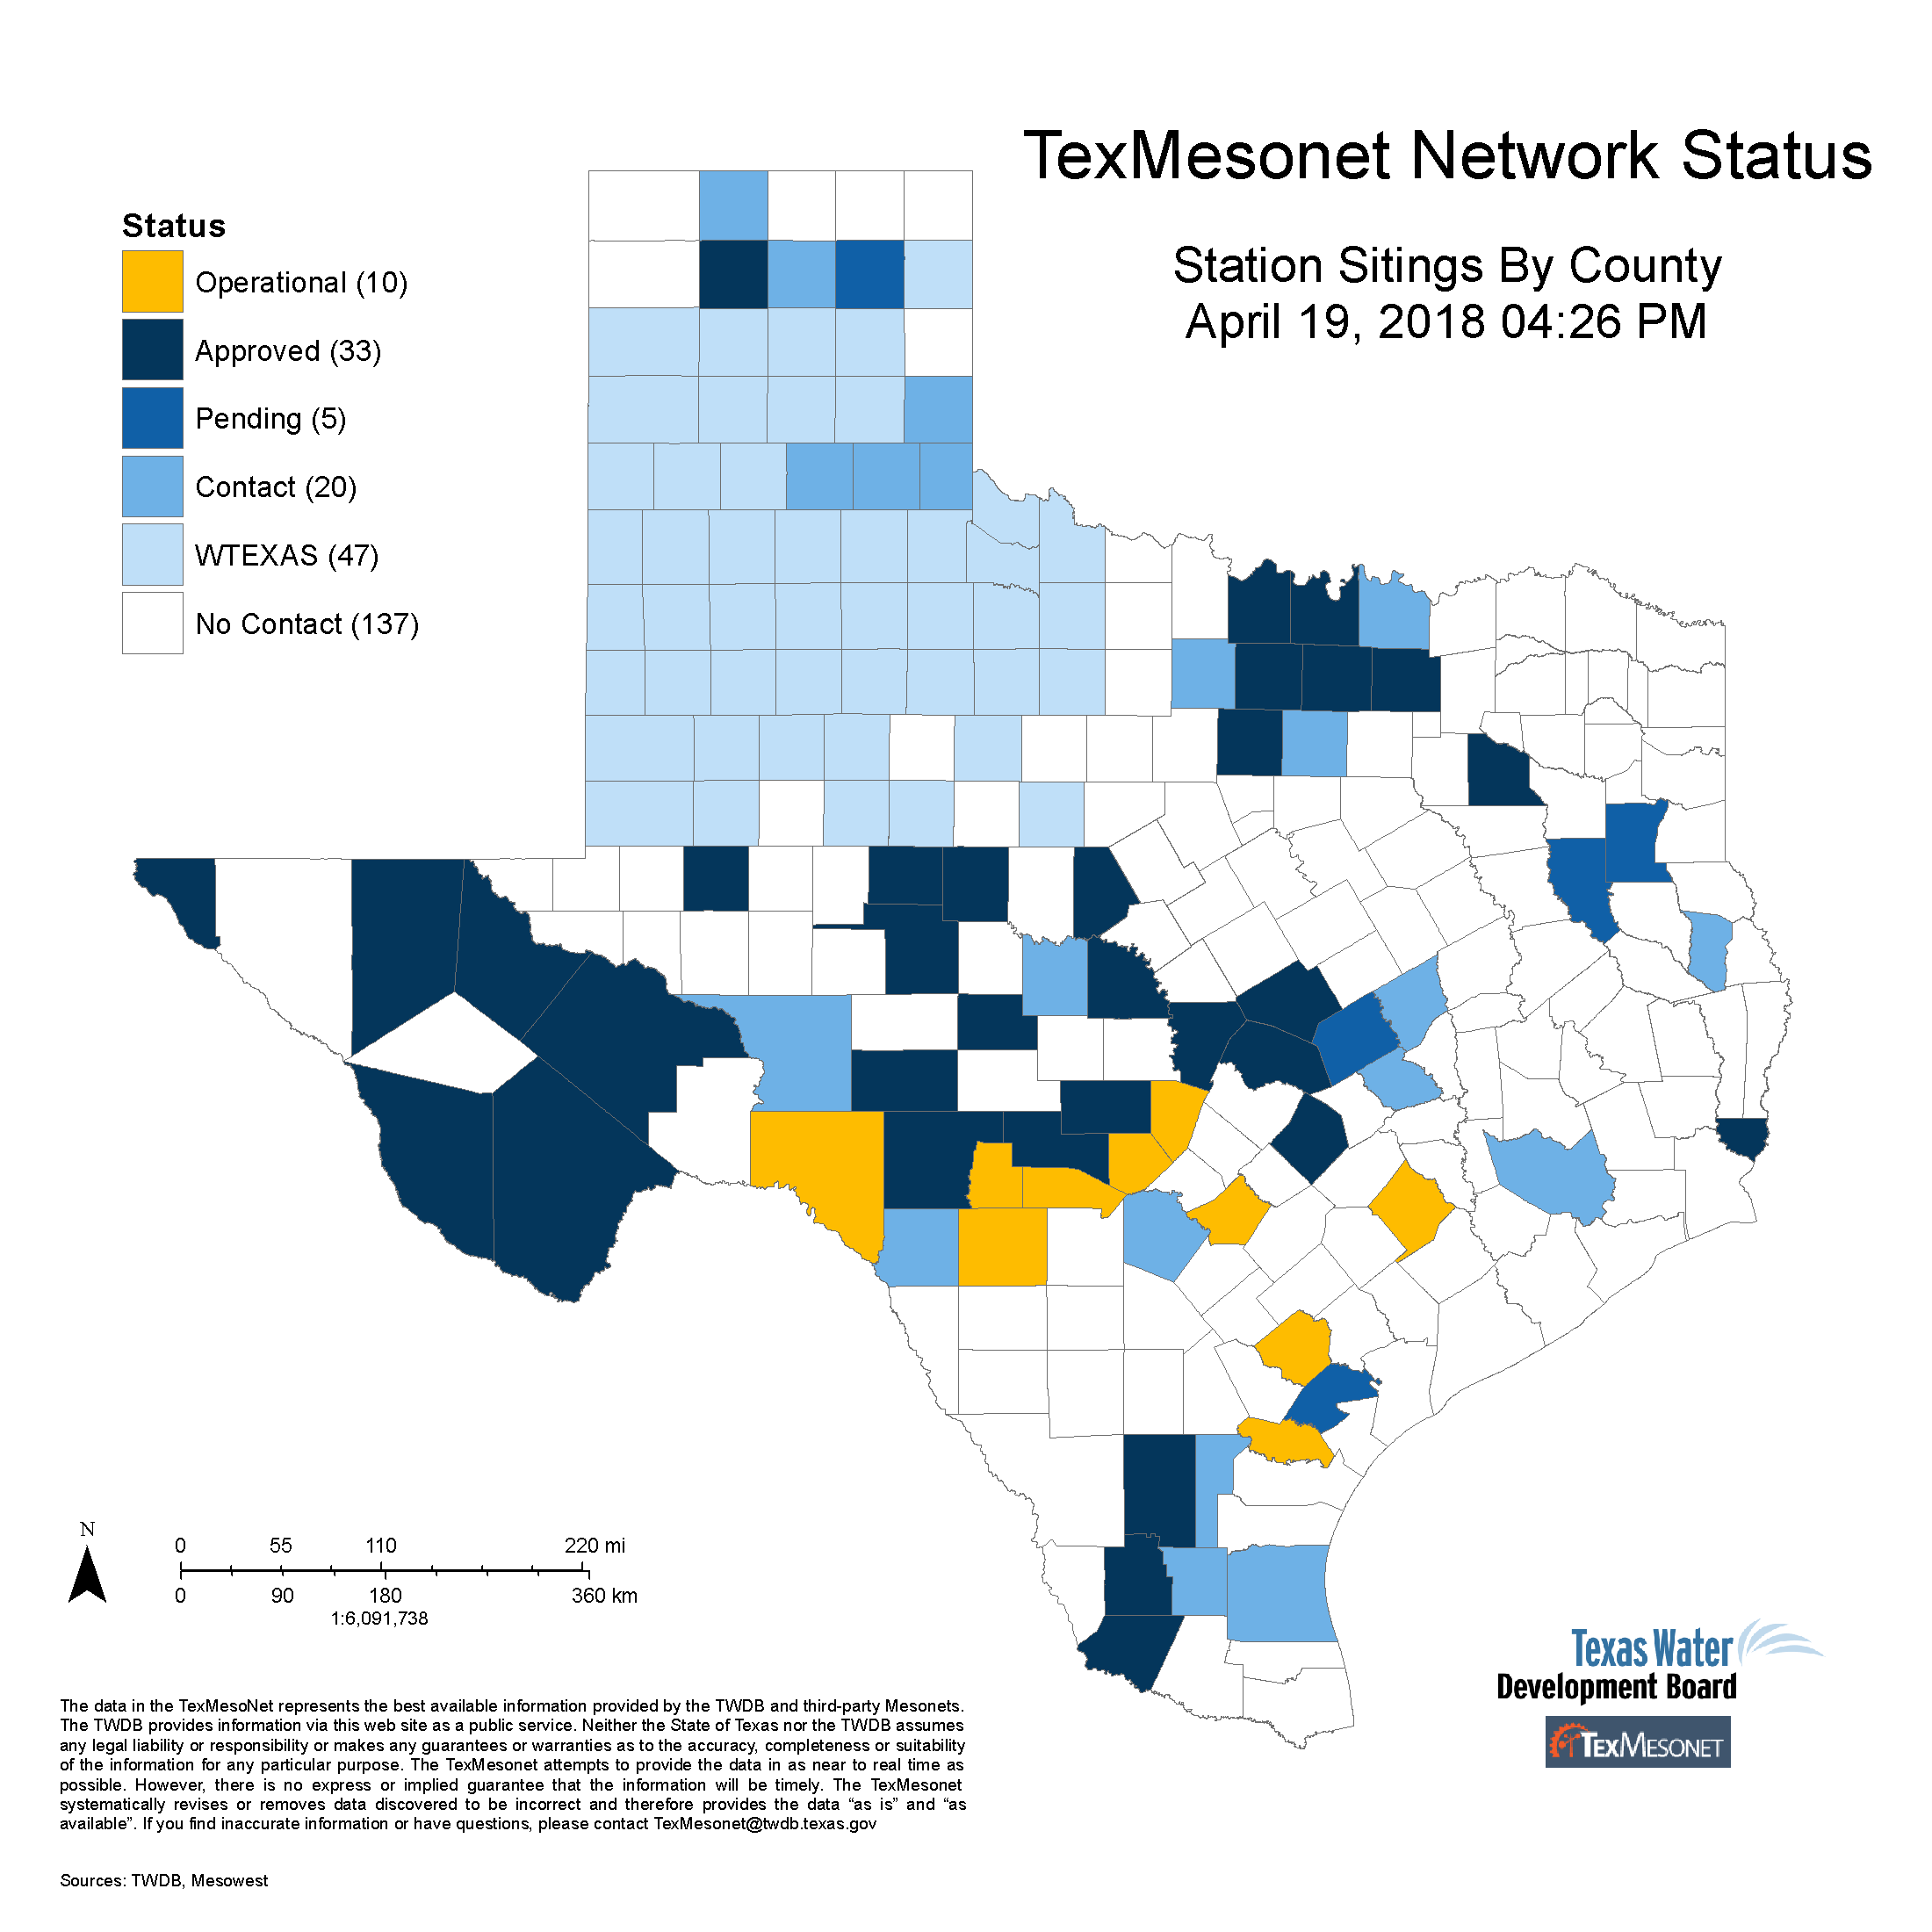 TexMesonet Network Status